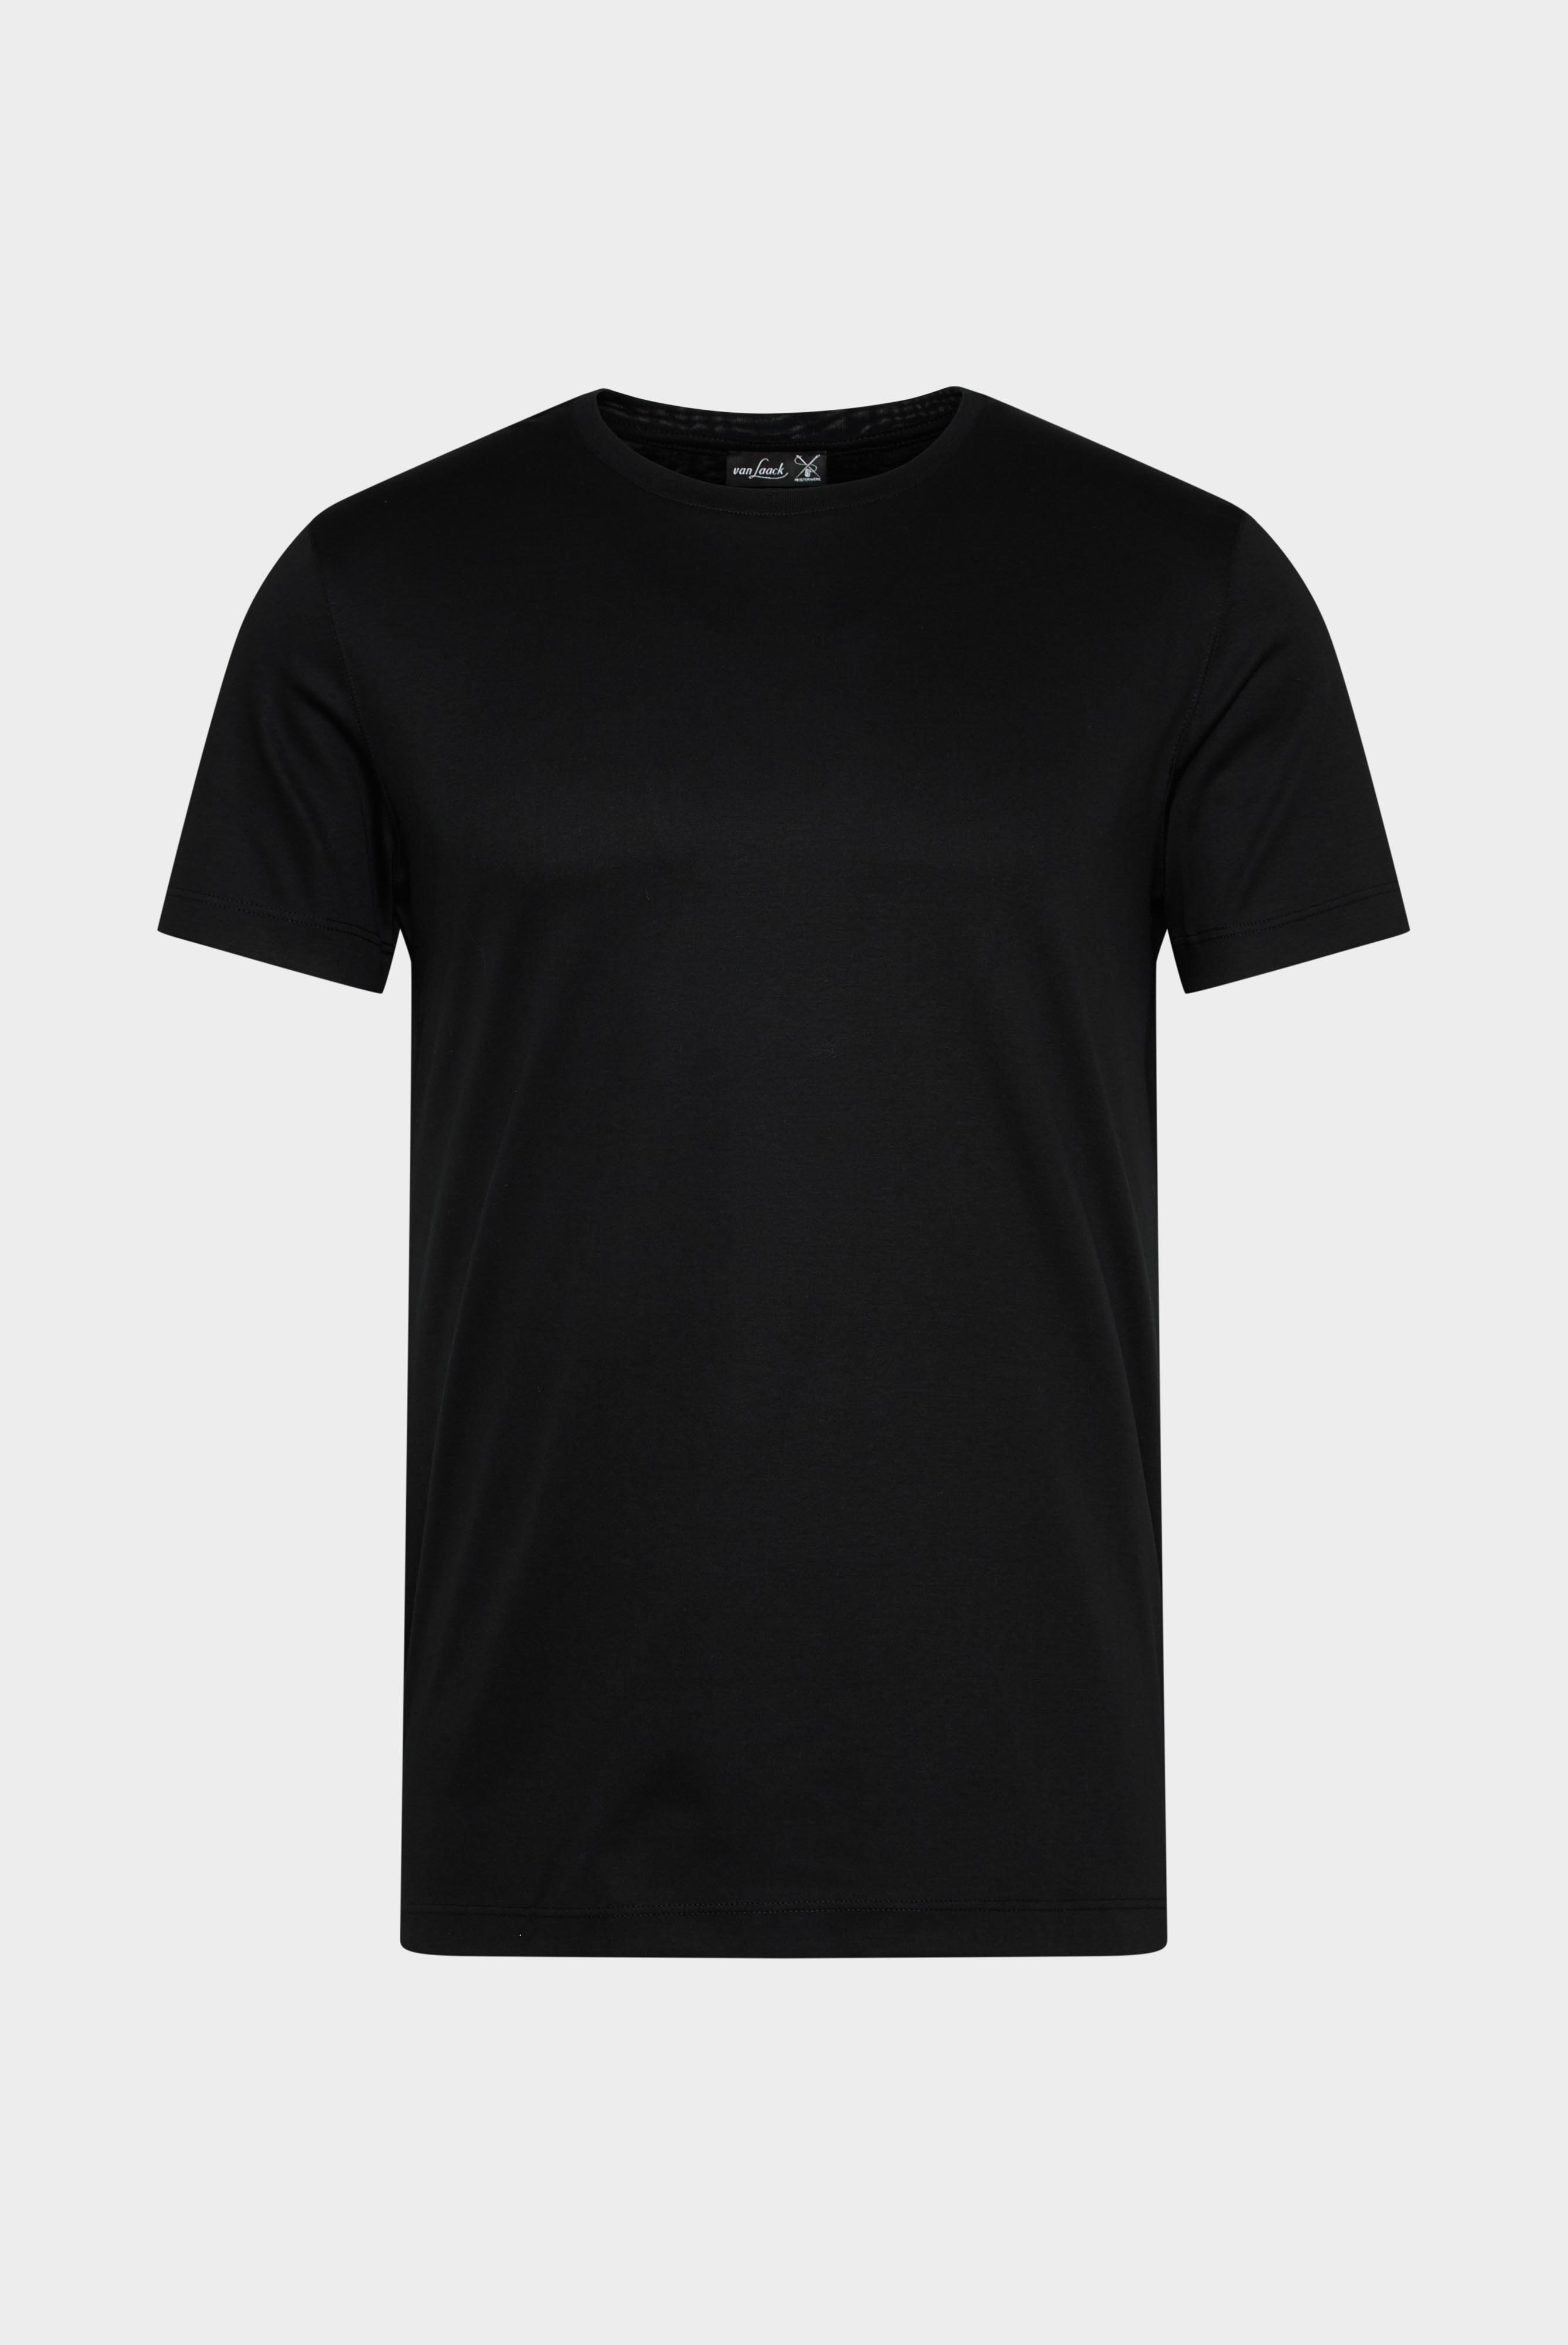 T-Shirts+Swiss Cotton Jersey Crew Neck T-Shirt+20.1717.UX.180031.099.X3L